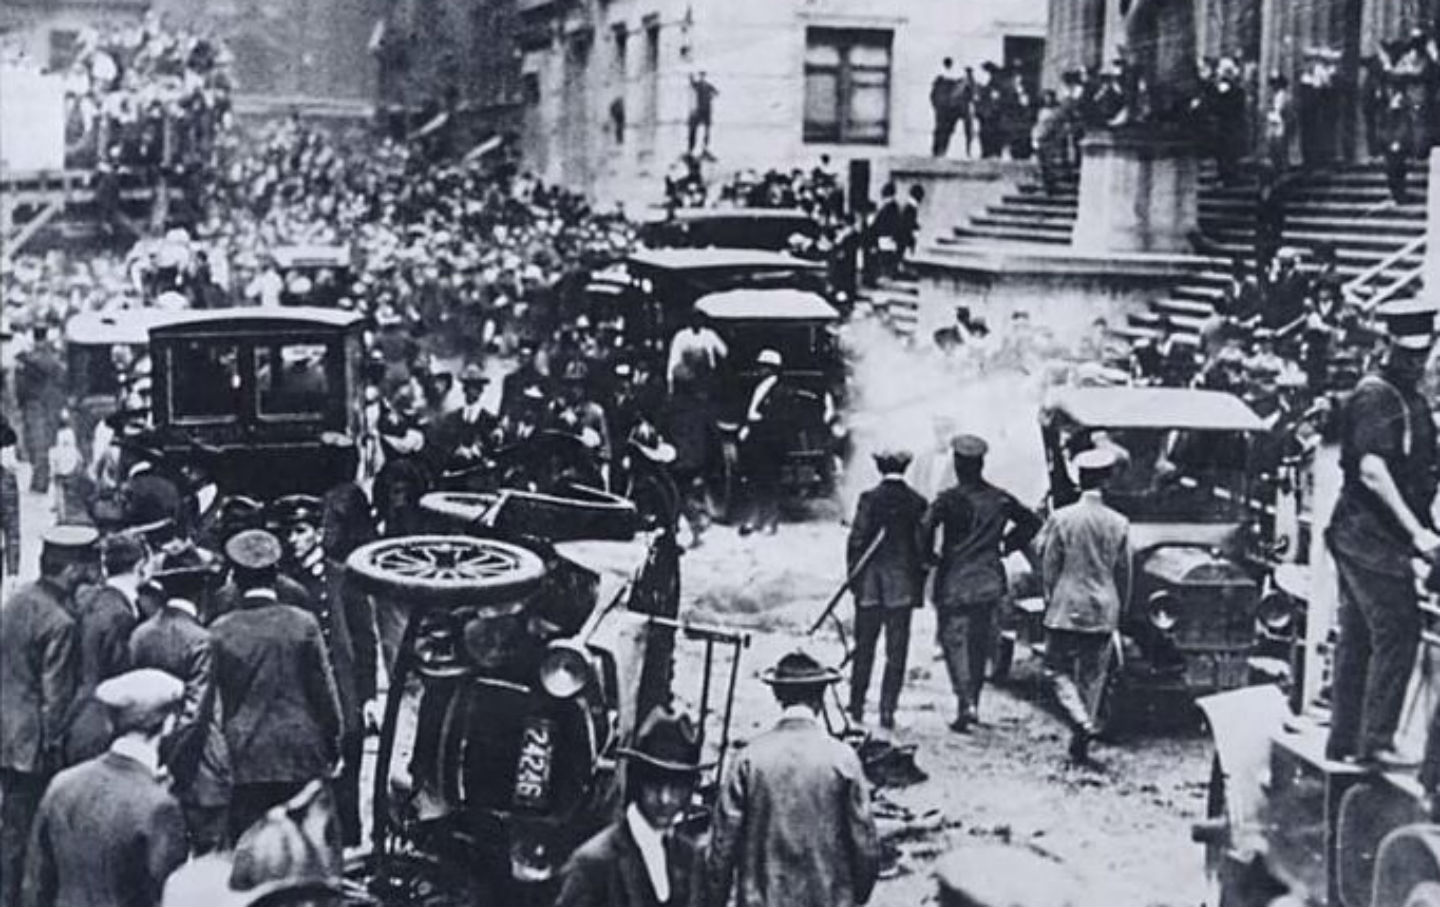 September 16, 1920: A Bomb Explodes in Wall Street, Killing 30